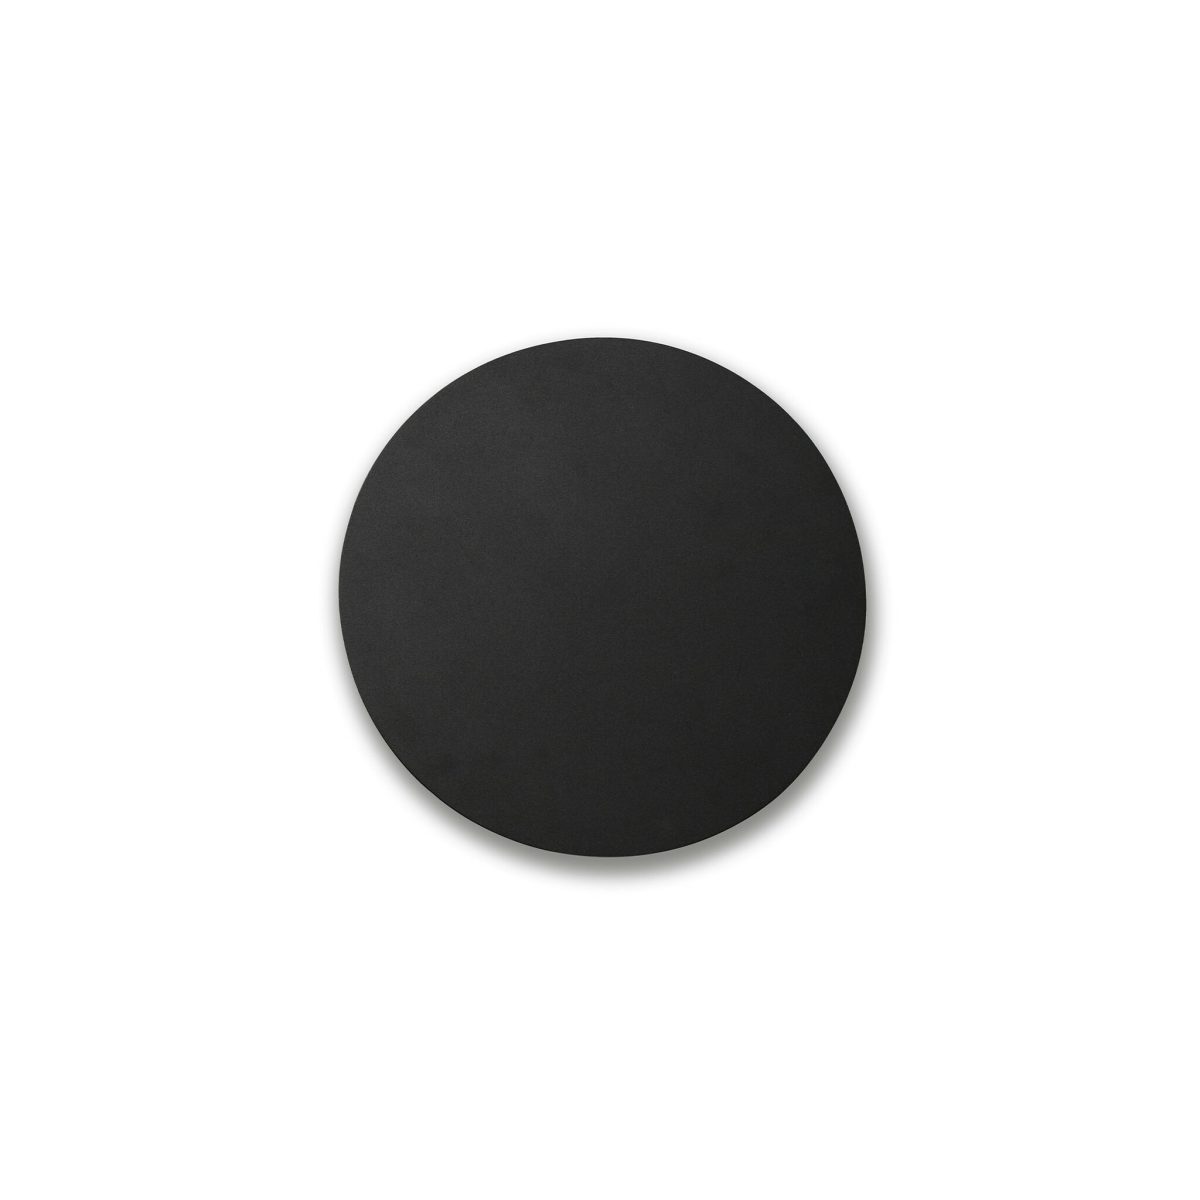 BOARD Aplique de Faro. Medidas: Ø 450 x L 450 x A 450 x F 30 mm. Color: Negro